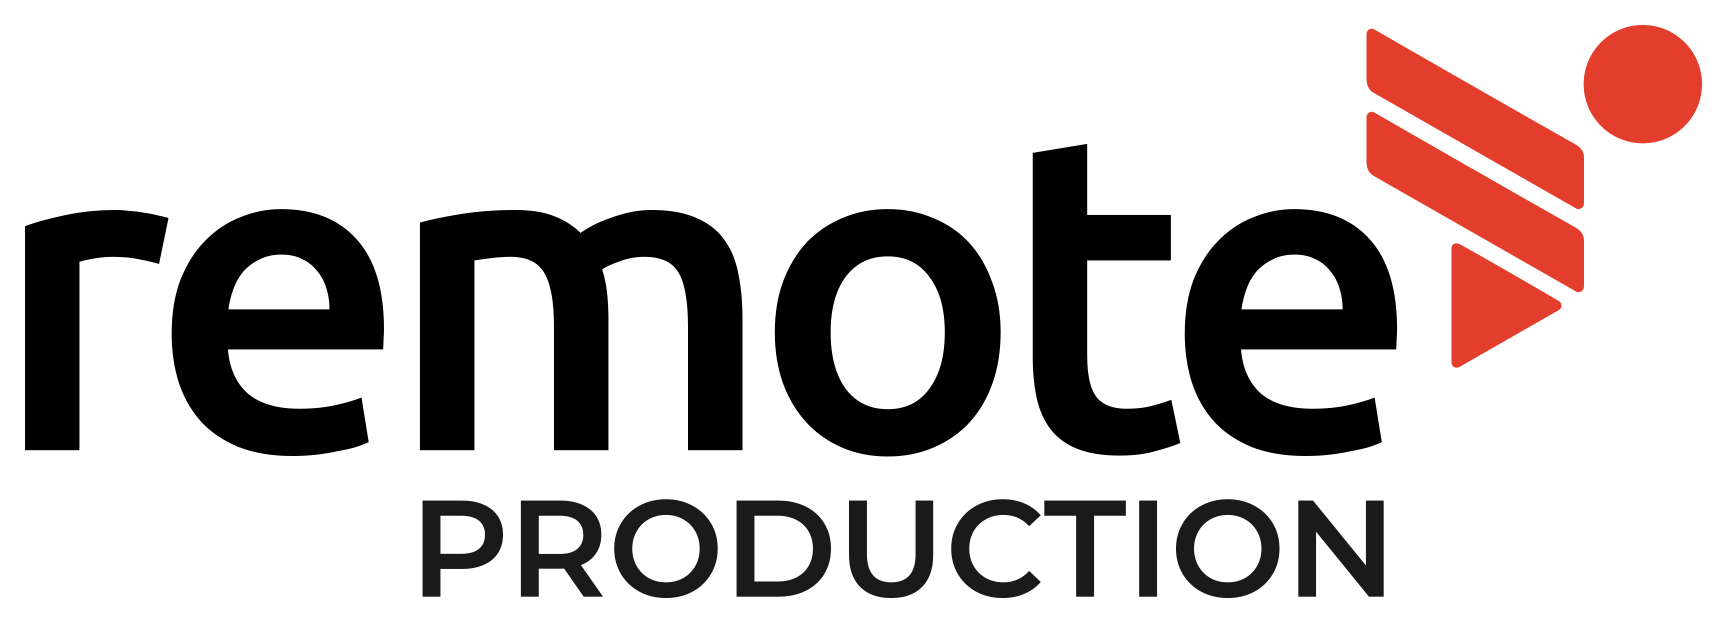 Remote Production logo